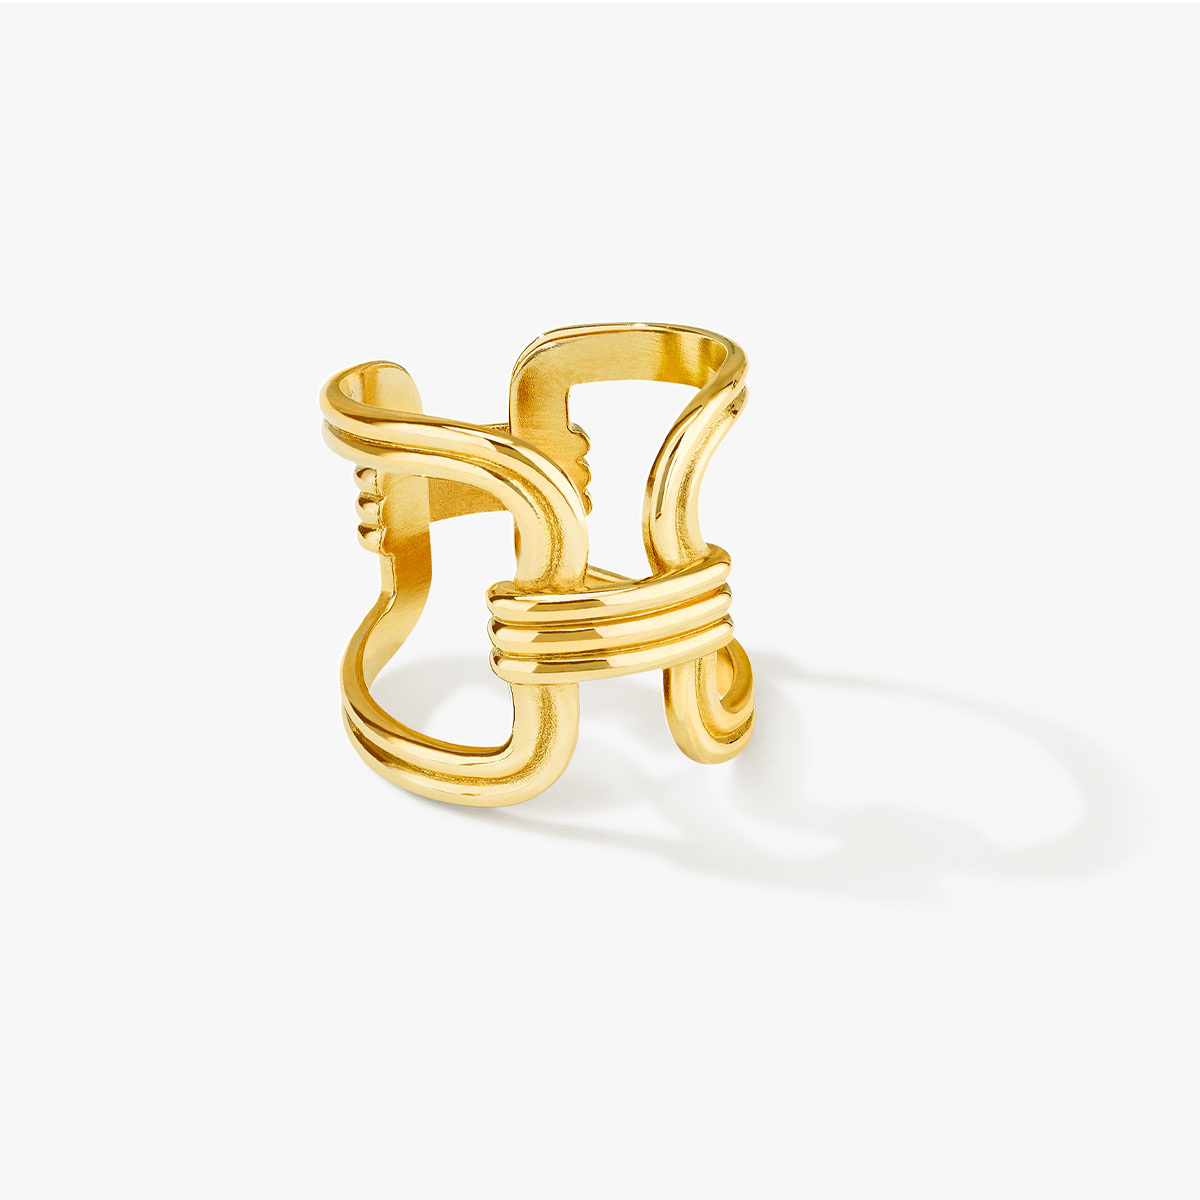 Organica Stone Ring, S51 - Golden Brass - image 1